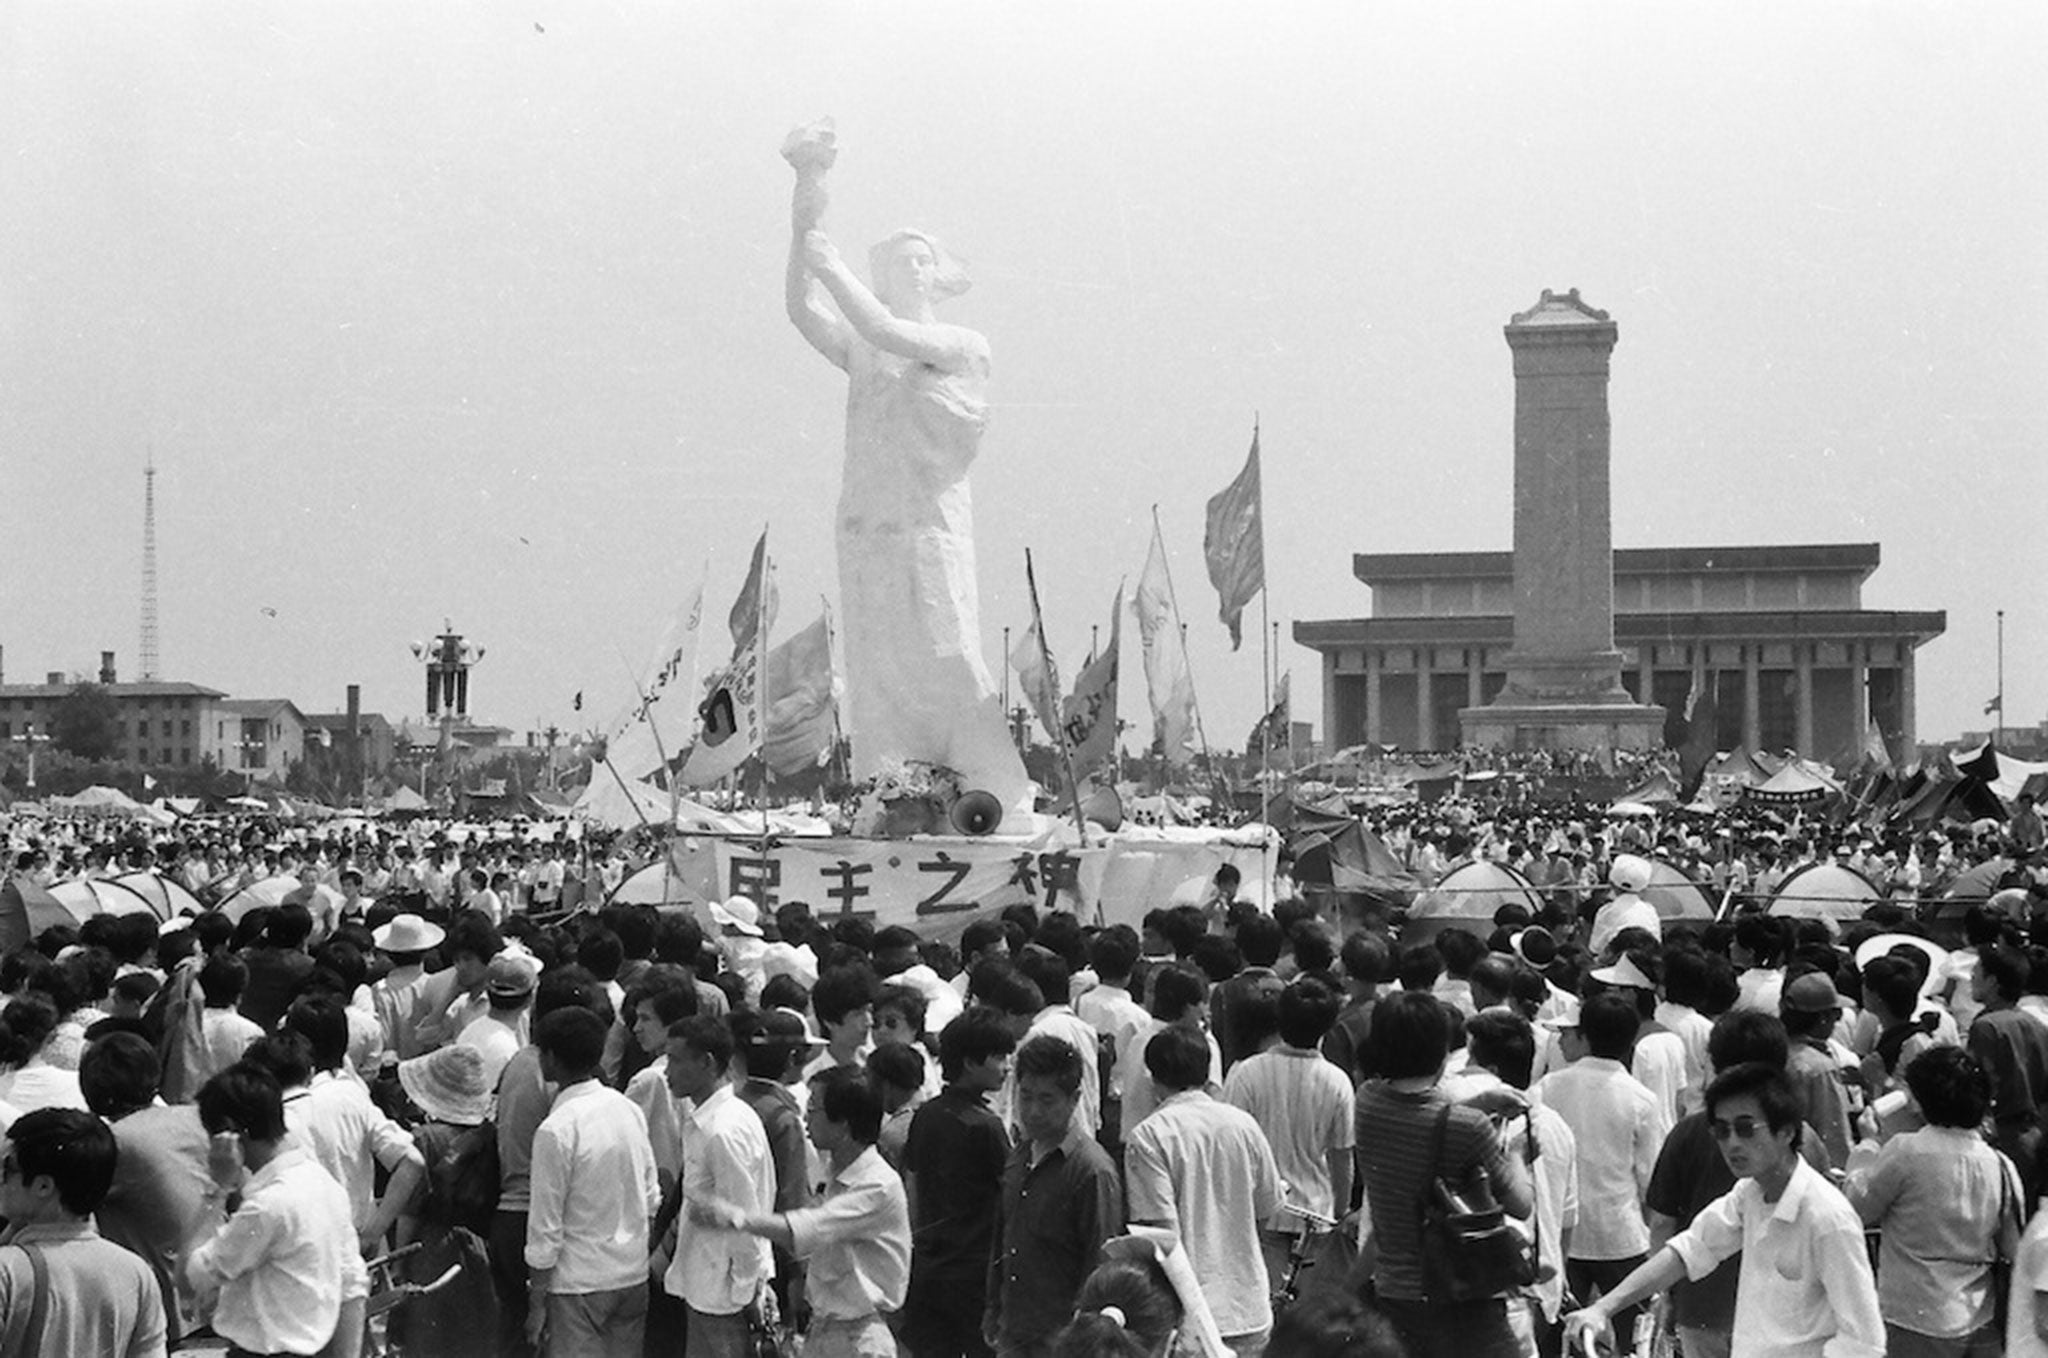 The Goddess of Democracy in Tiananmen Square